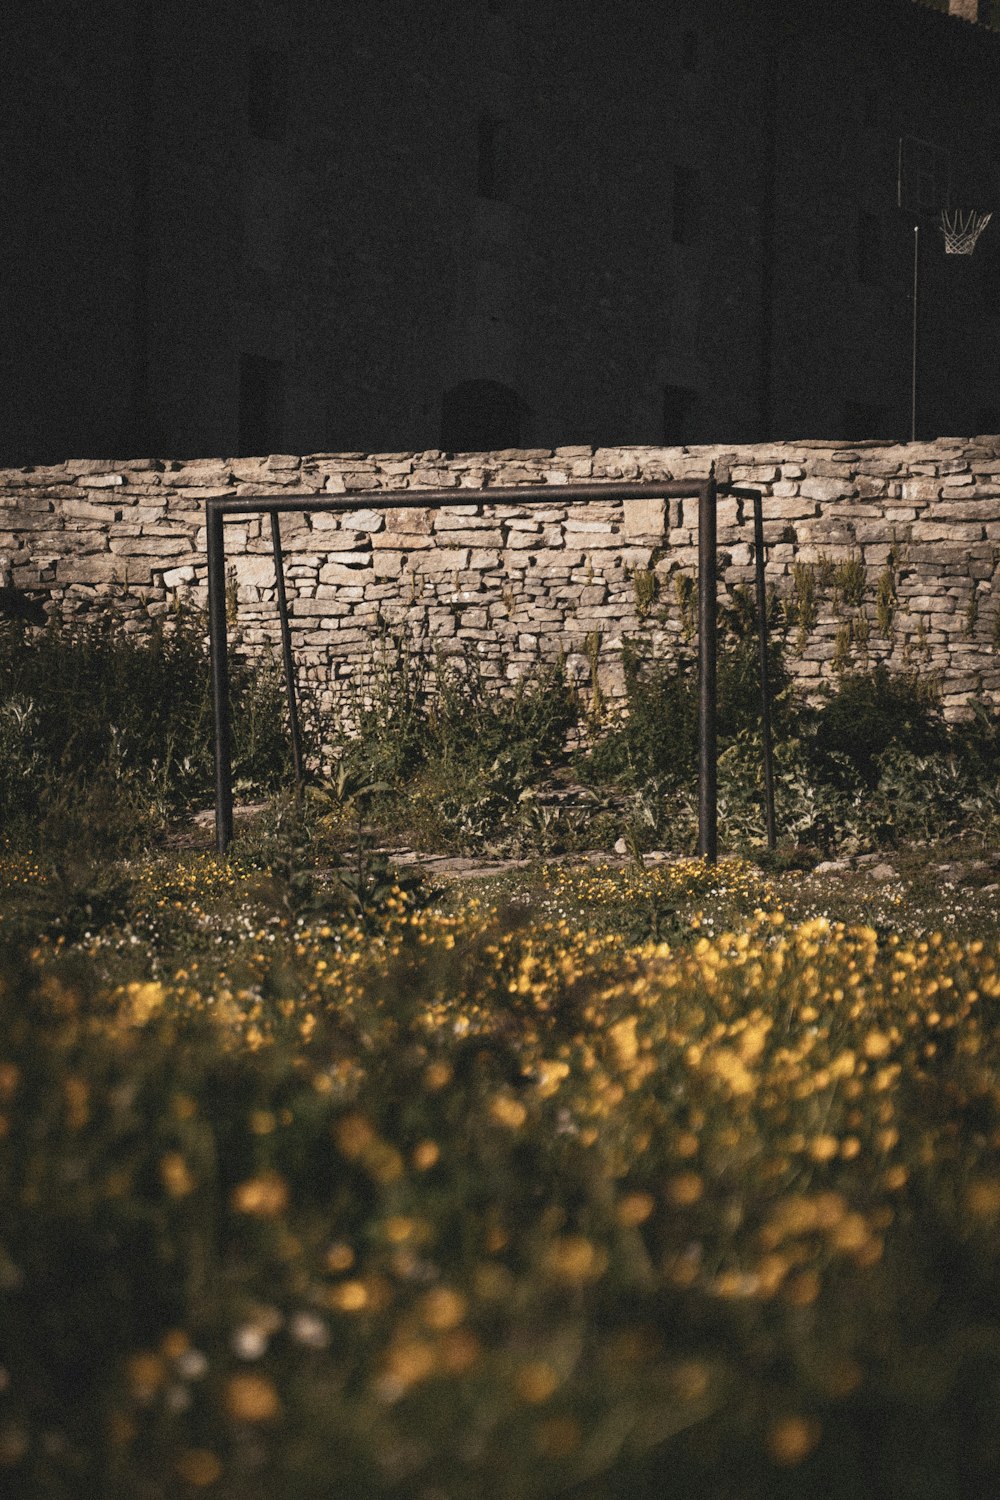 yellow flower field near brown brick wall